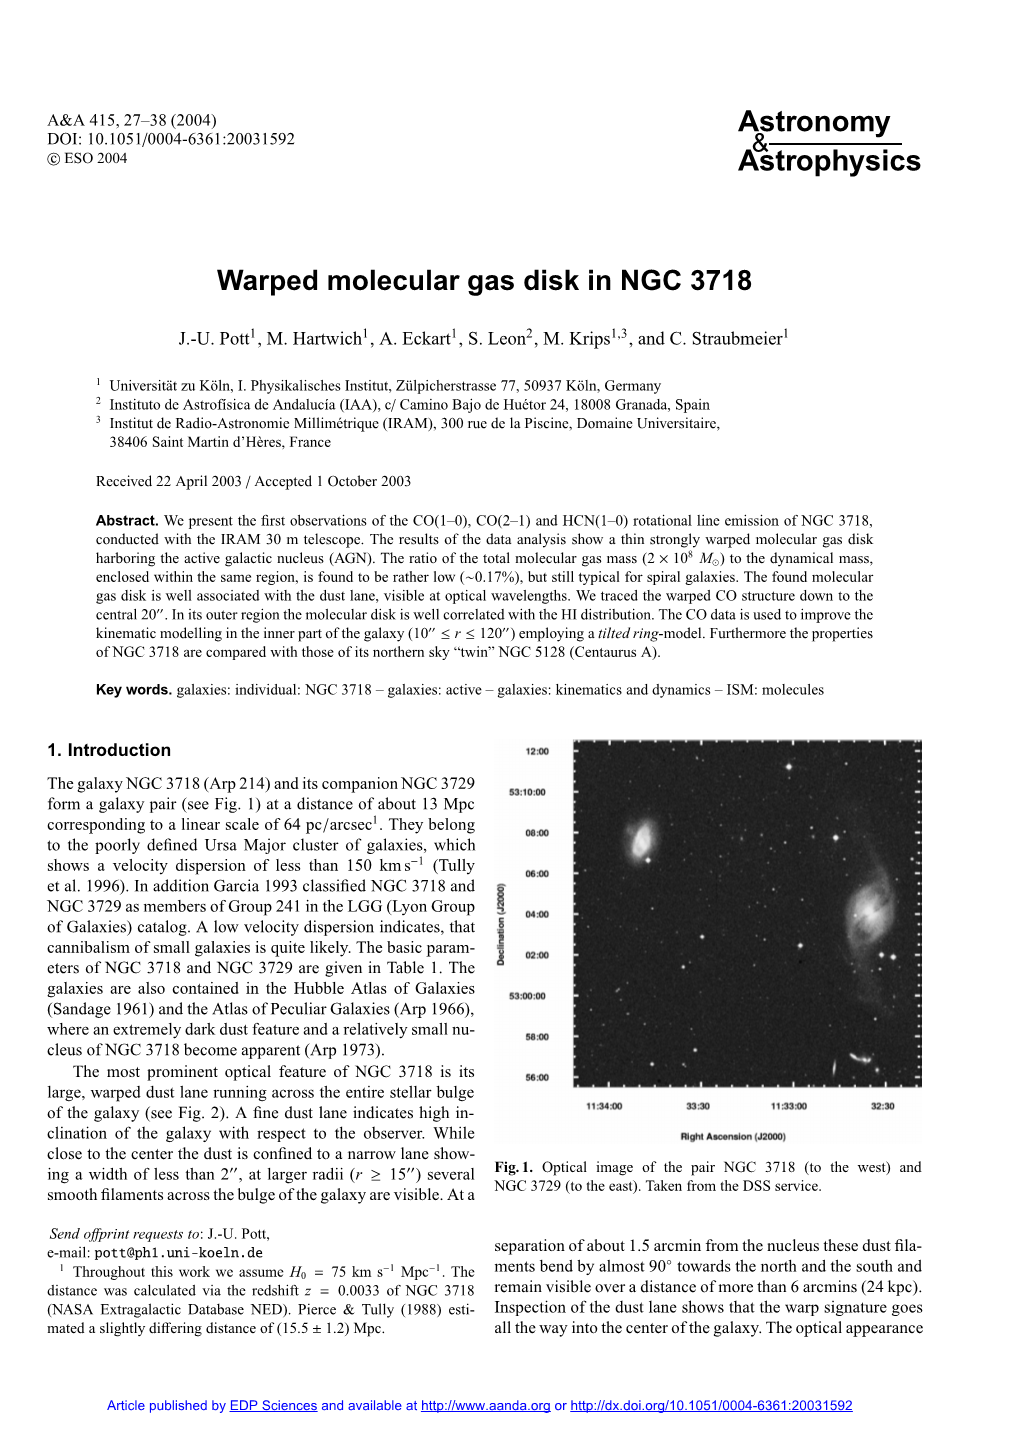 Warped Molecular Gas Disk in NGC 3718